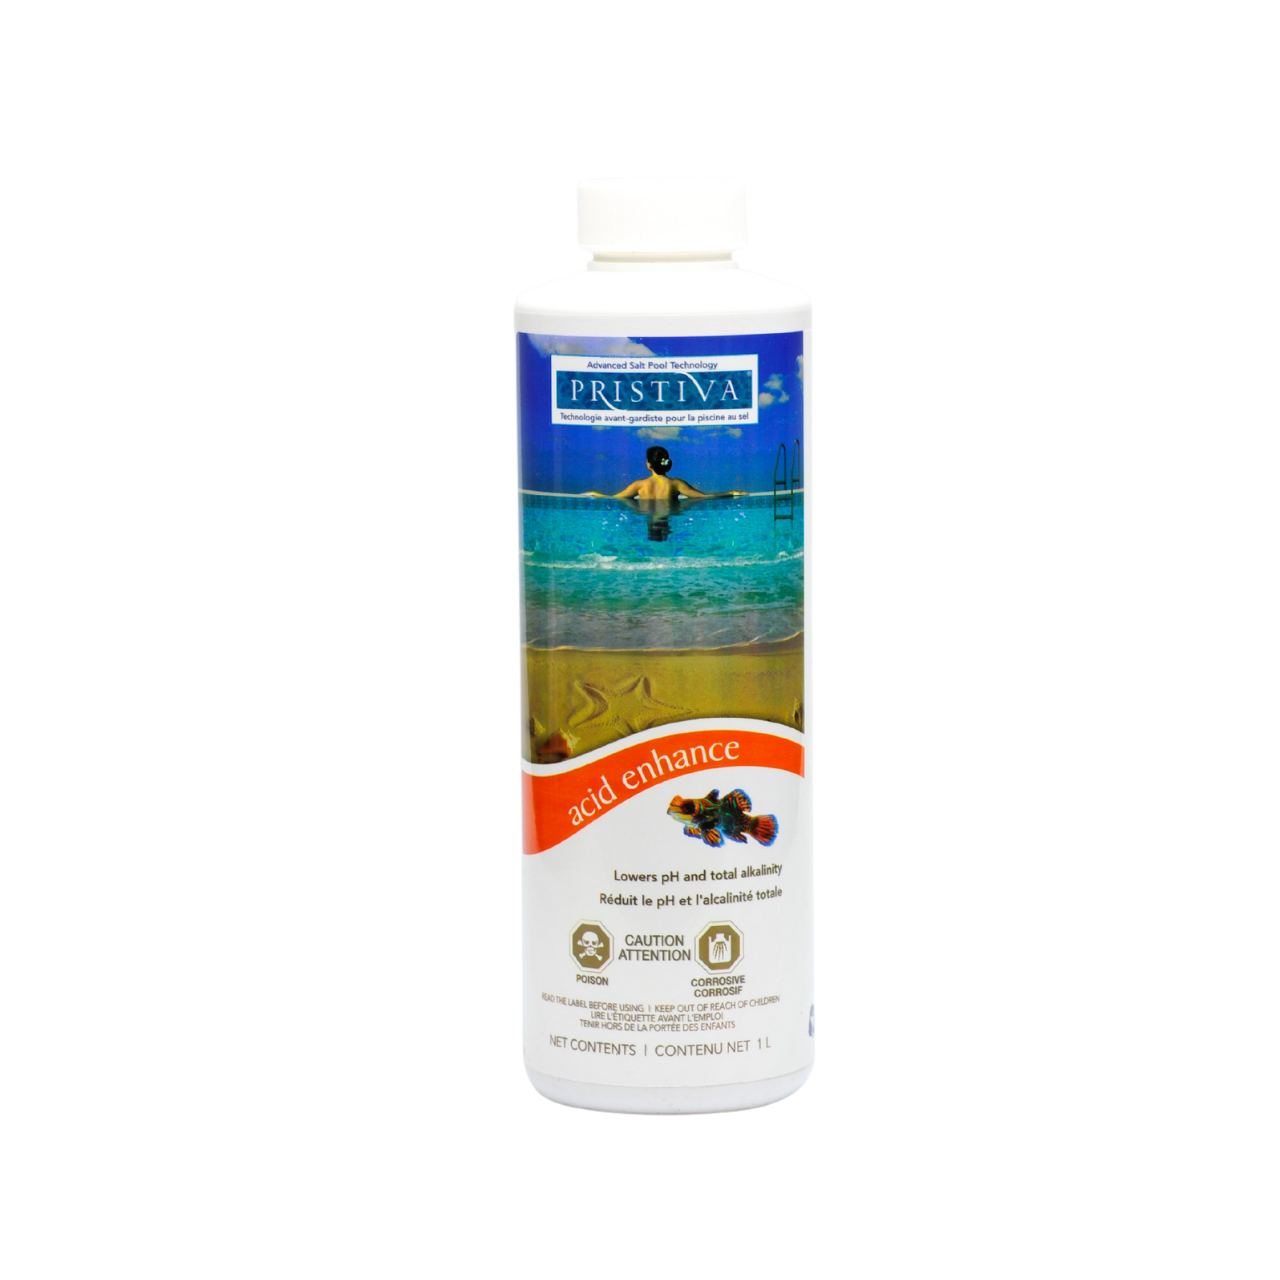 Pristiva® Acid Enhance - Safer Liquid Acid for Lowering pH and Total Alkalinity in a Salt Pool